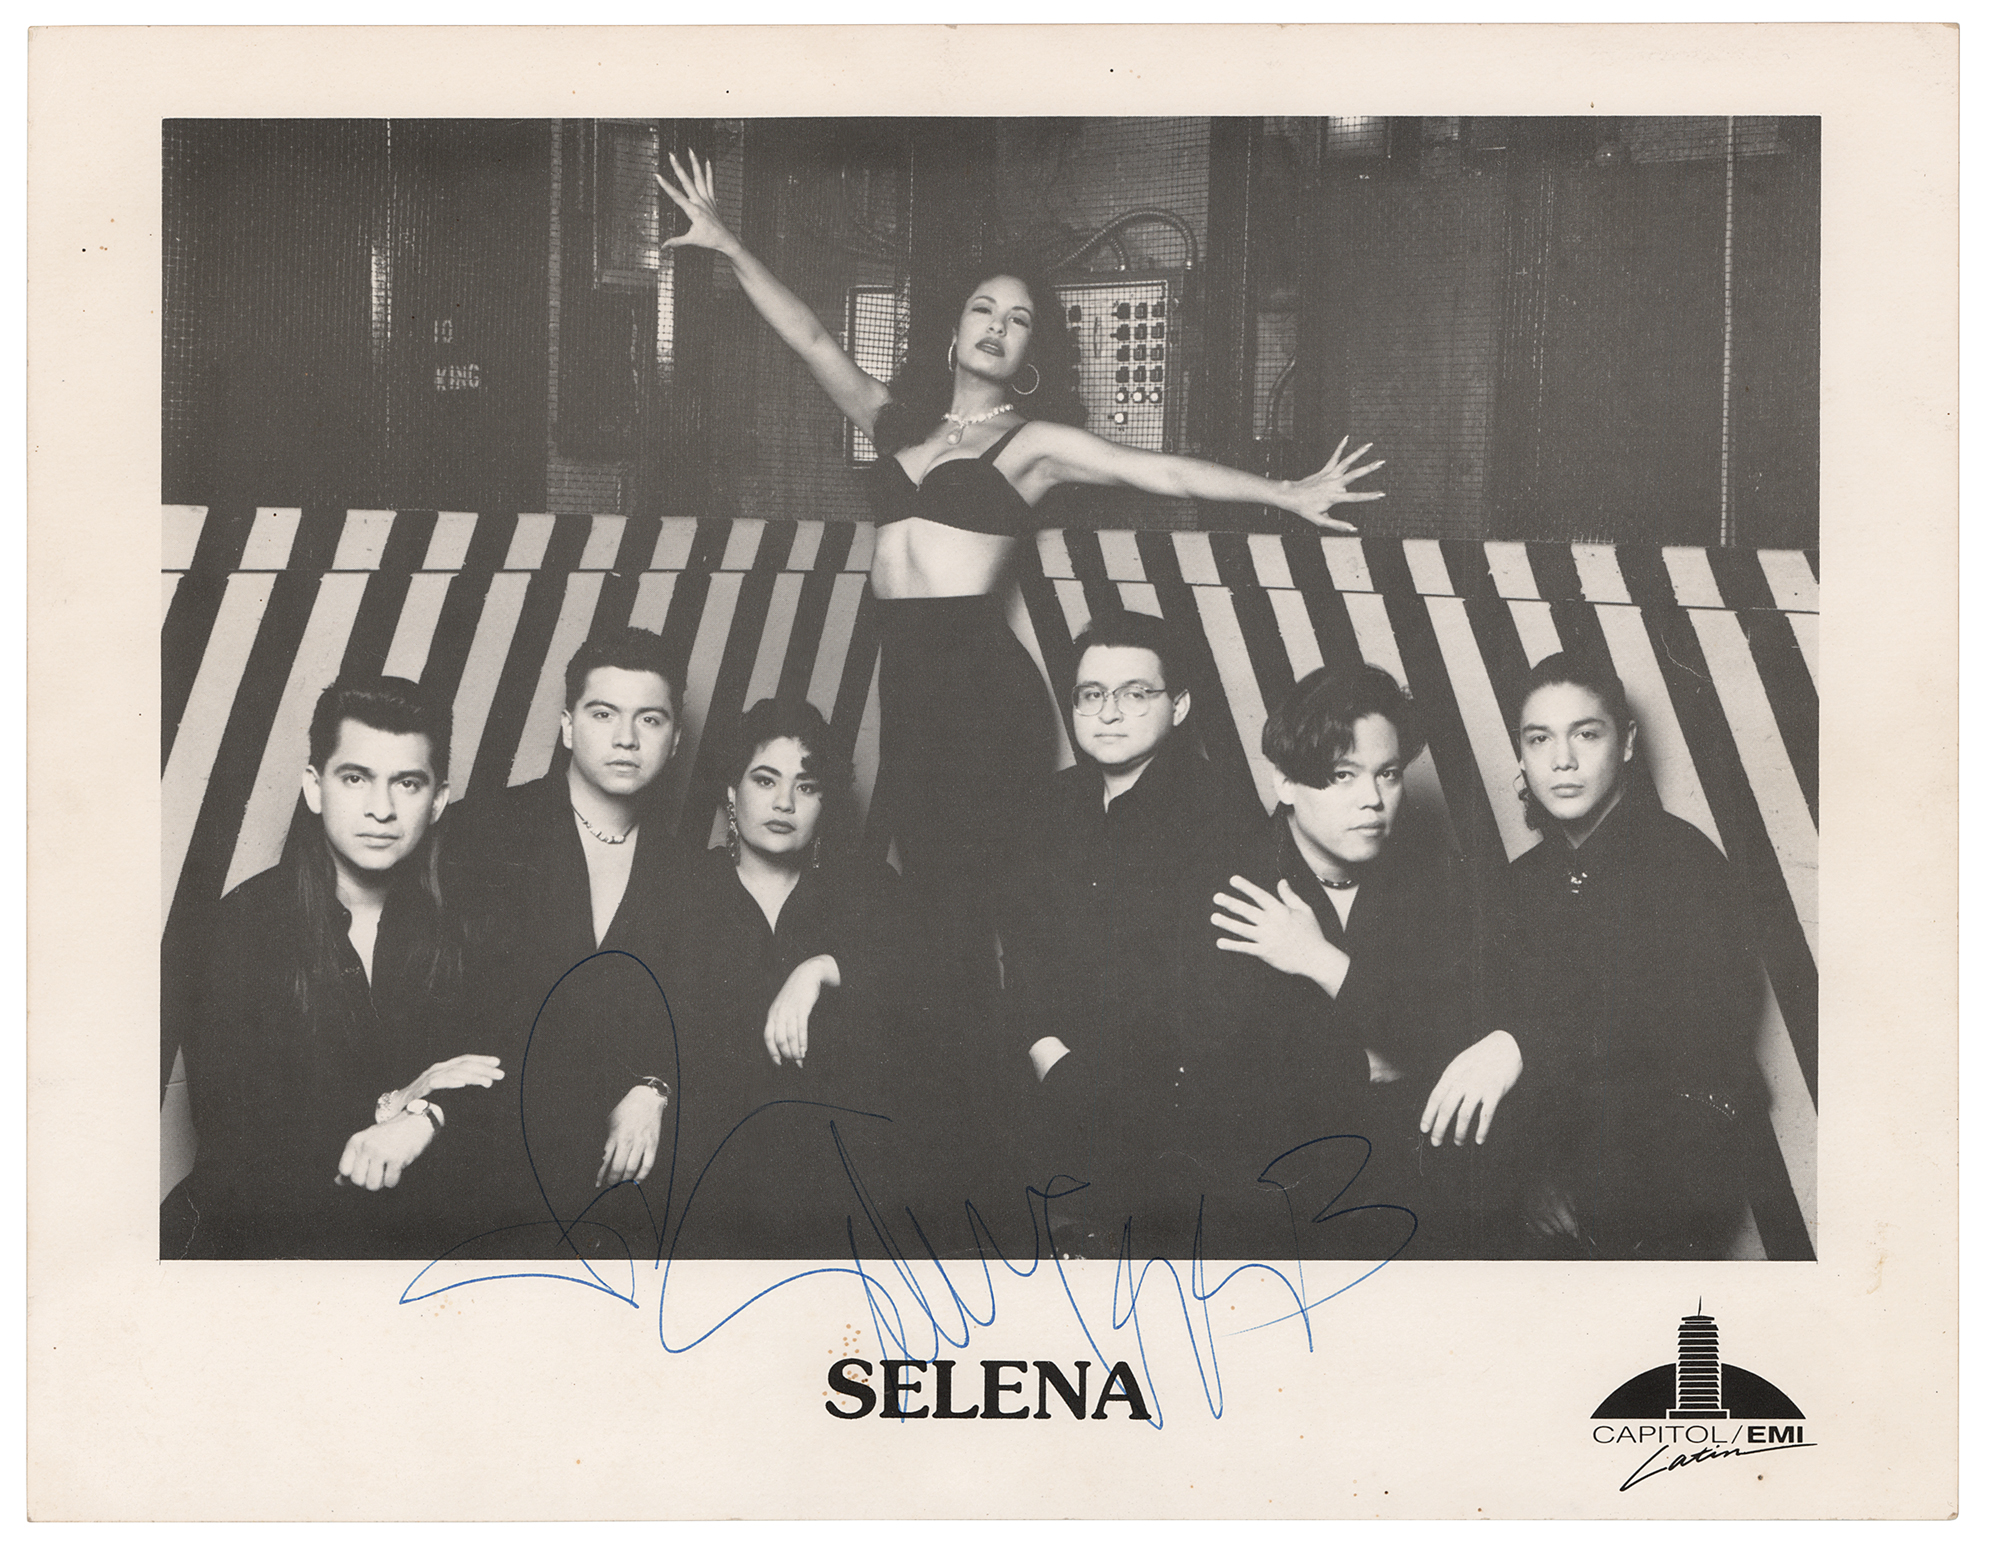 Lot #4642 Selena Signed Photograph